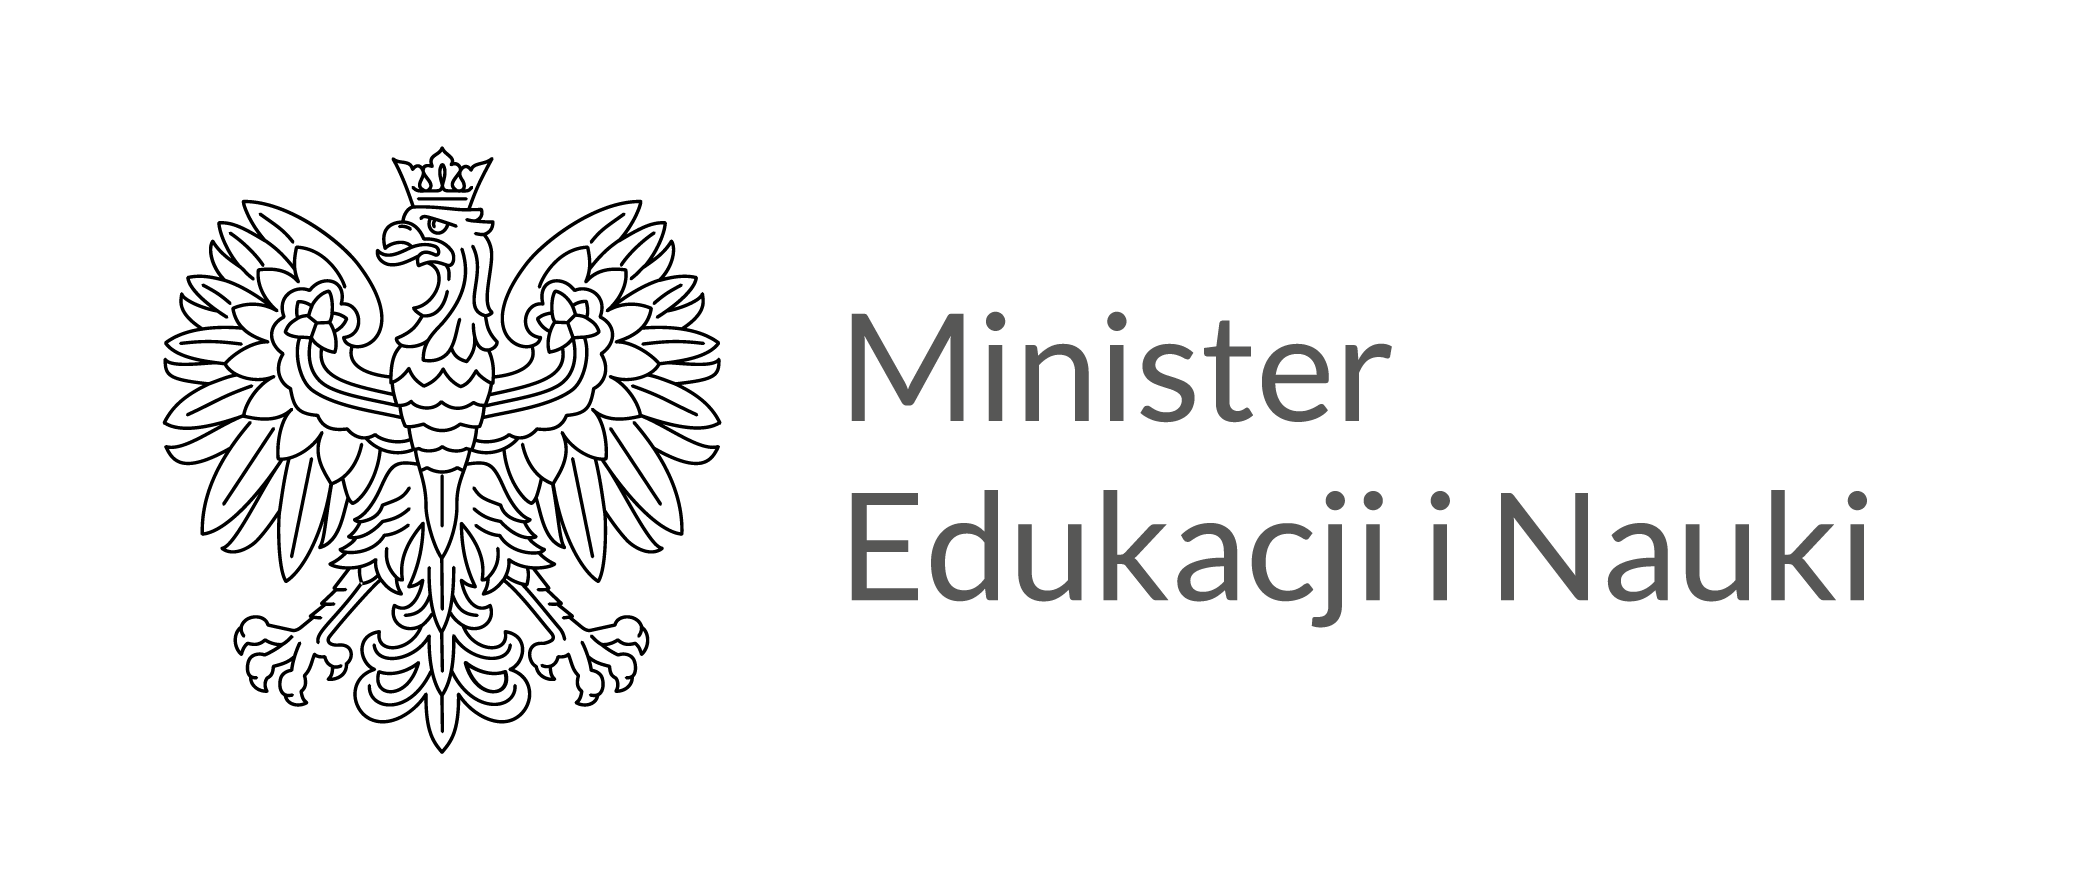 Logo Minister Edukacji i Nauki